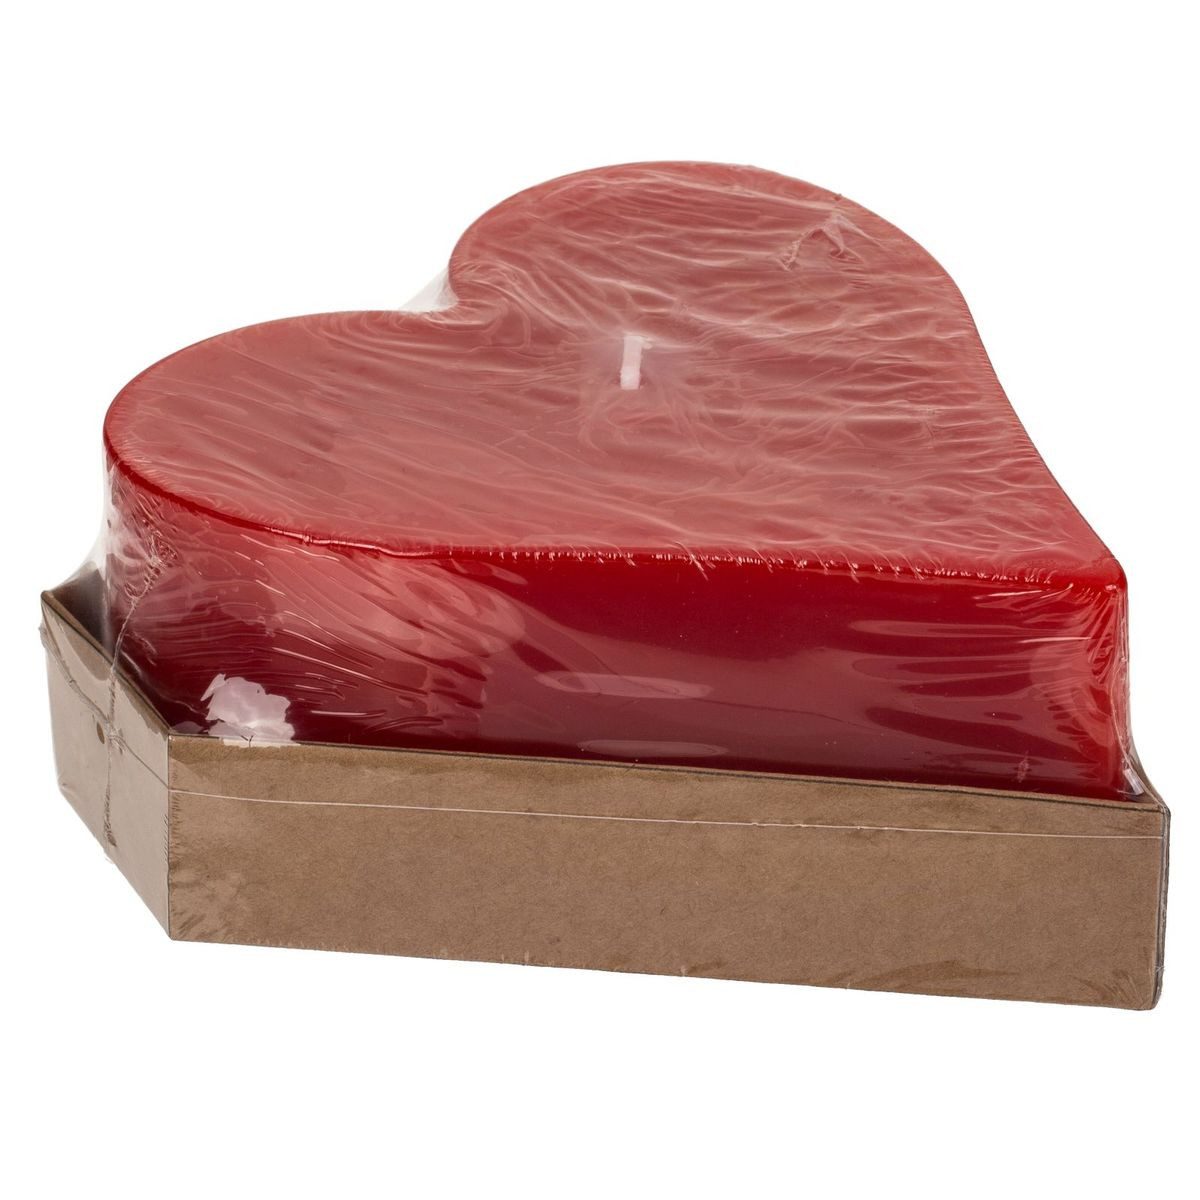 Marabellas Shop Formkerze Herzform Blockkerze aus Wachs 13x6 cm geruchlos inkl. Geschenkkarton, duftfrei